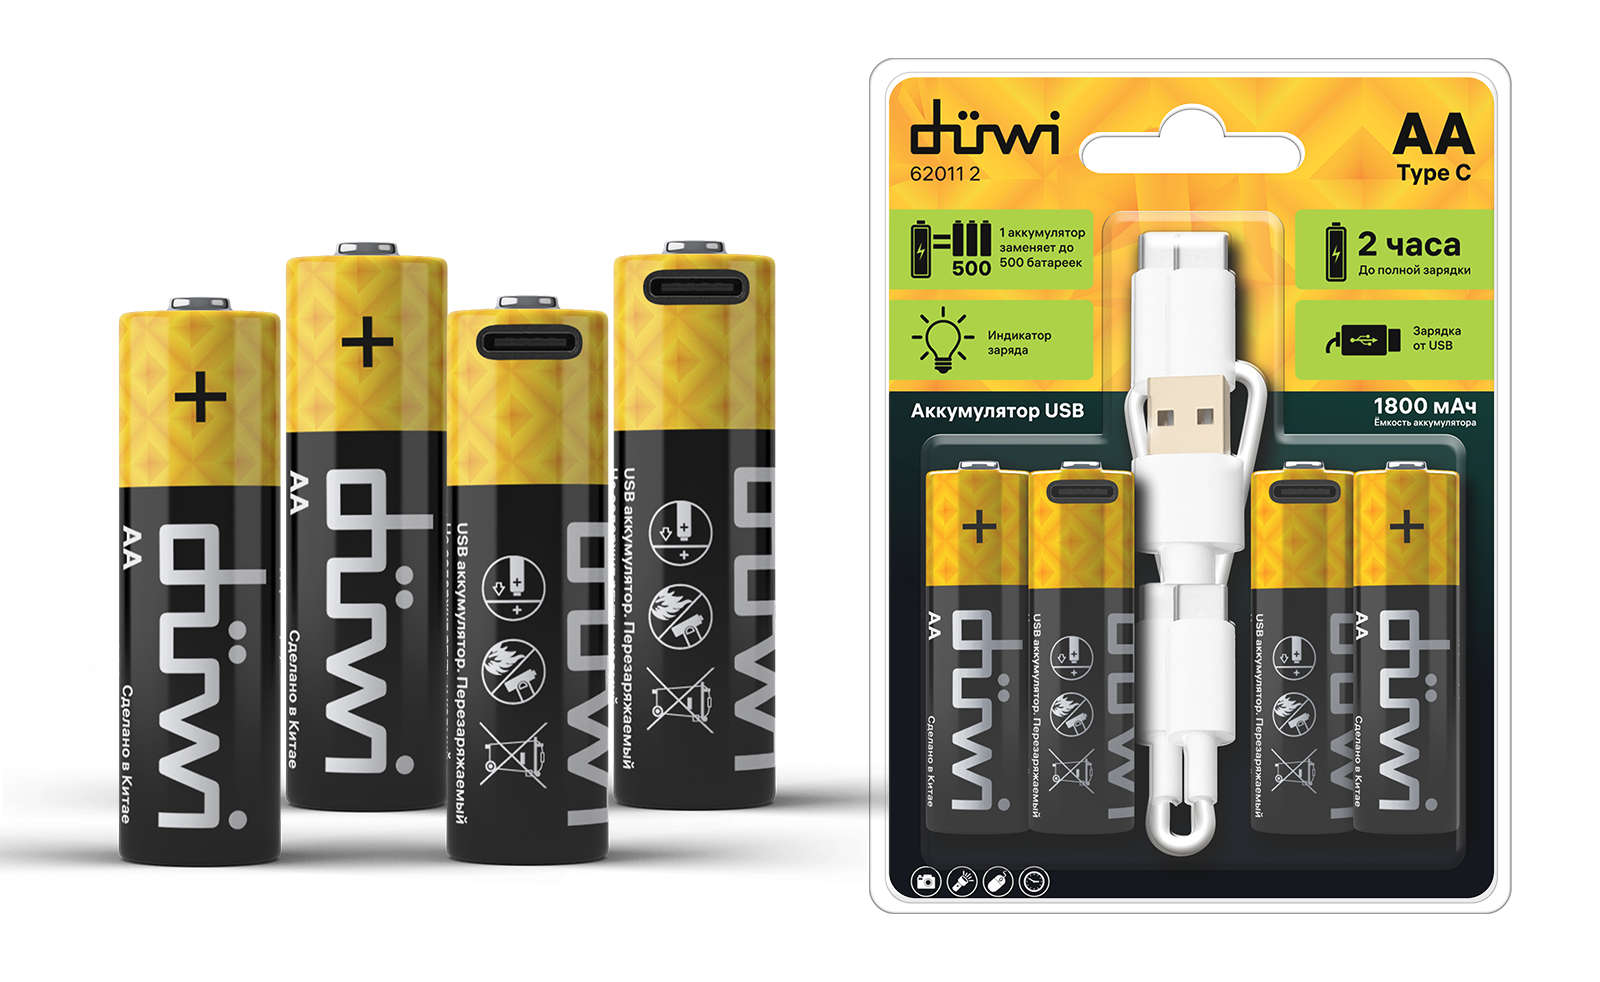 Аккумулятор, USB-C, Li-Ion, AA,1.5V, 1800 мАч, 4шт., кабель для зарядки, 62011 2, duwi аккумулятор duwi